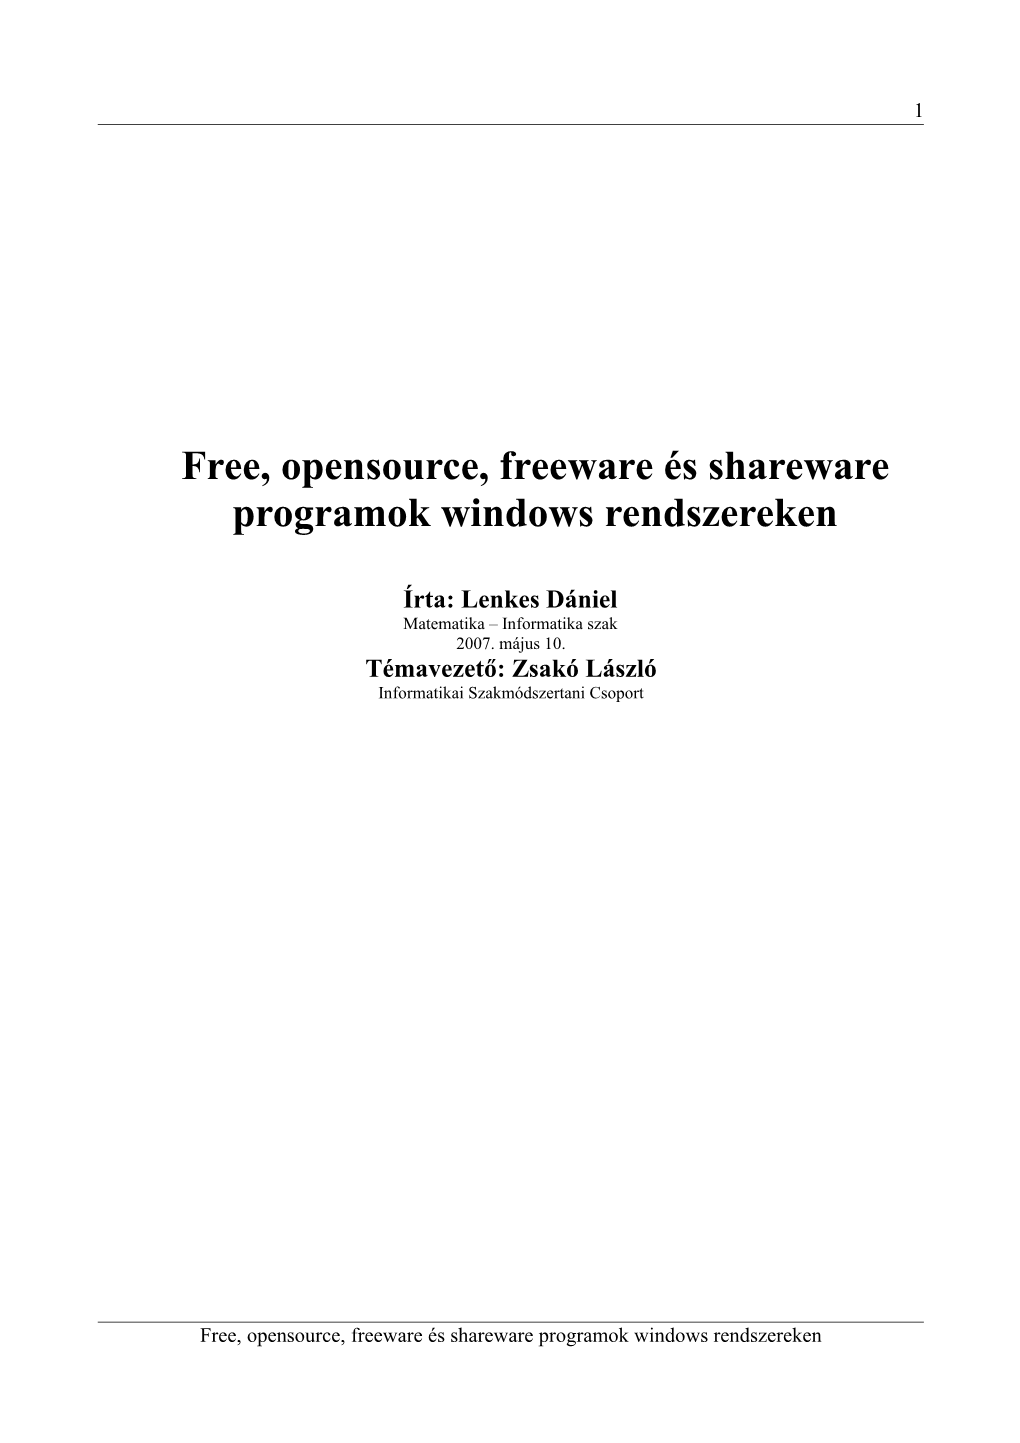 Free, Opensource, Freeware És Shareware Programok Windows Rendszereken